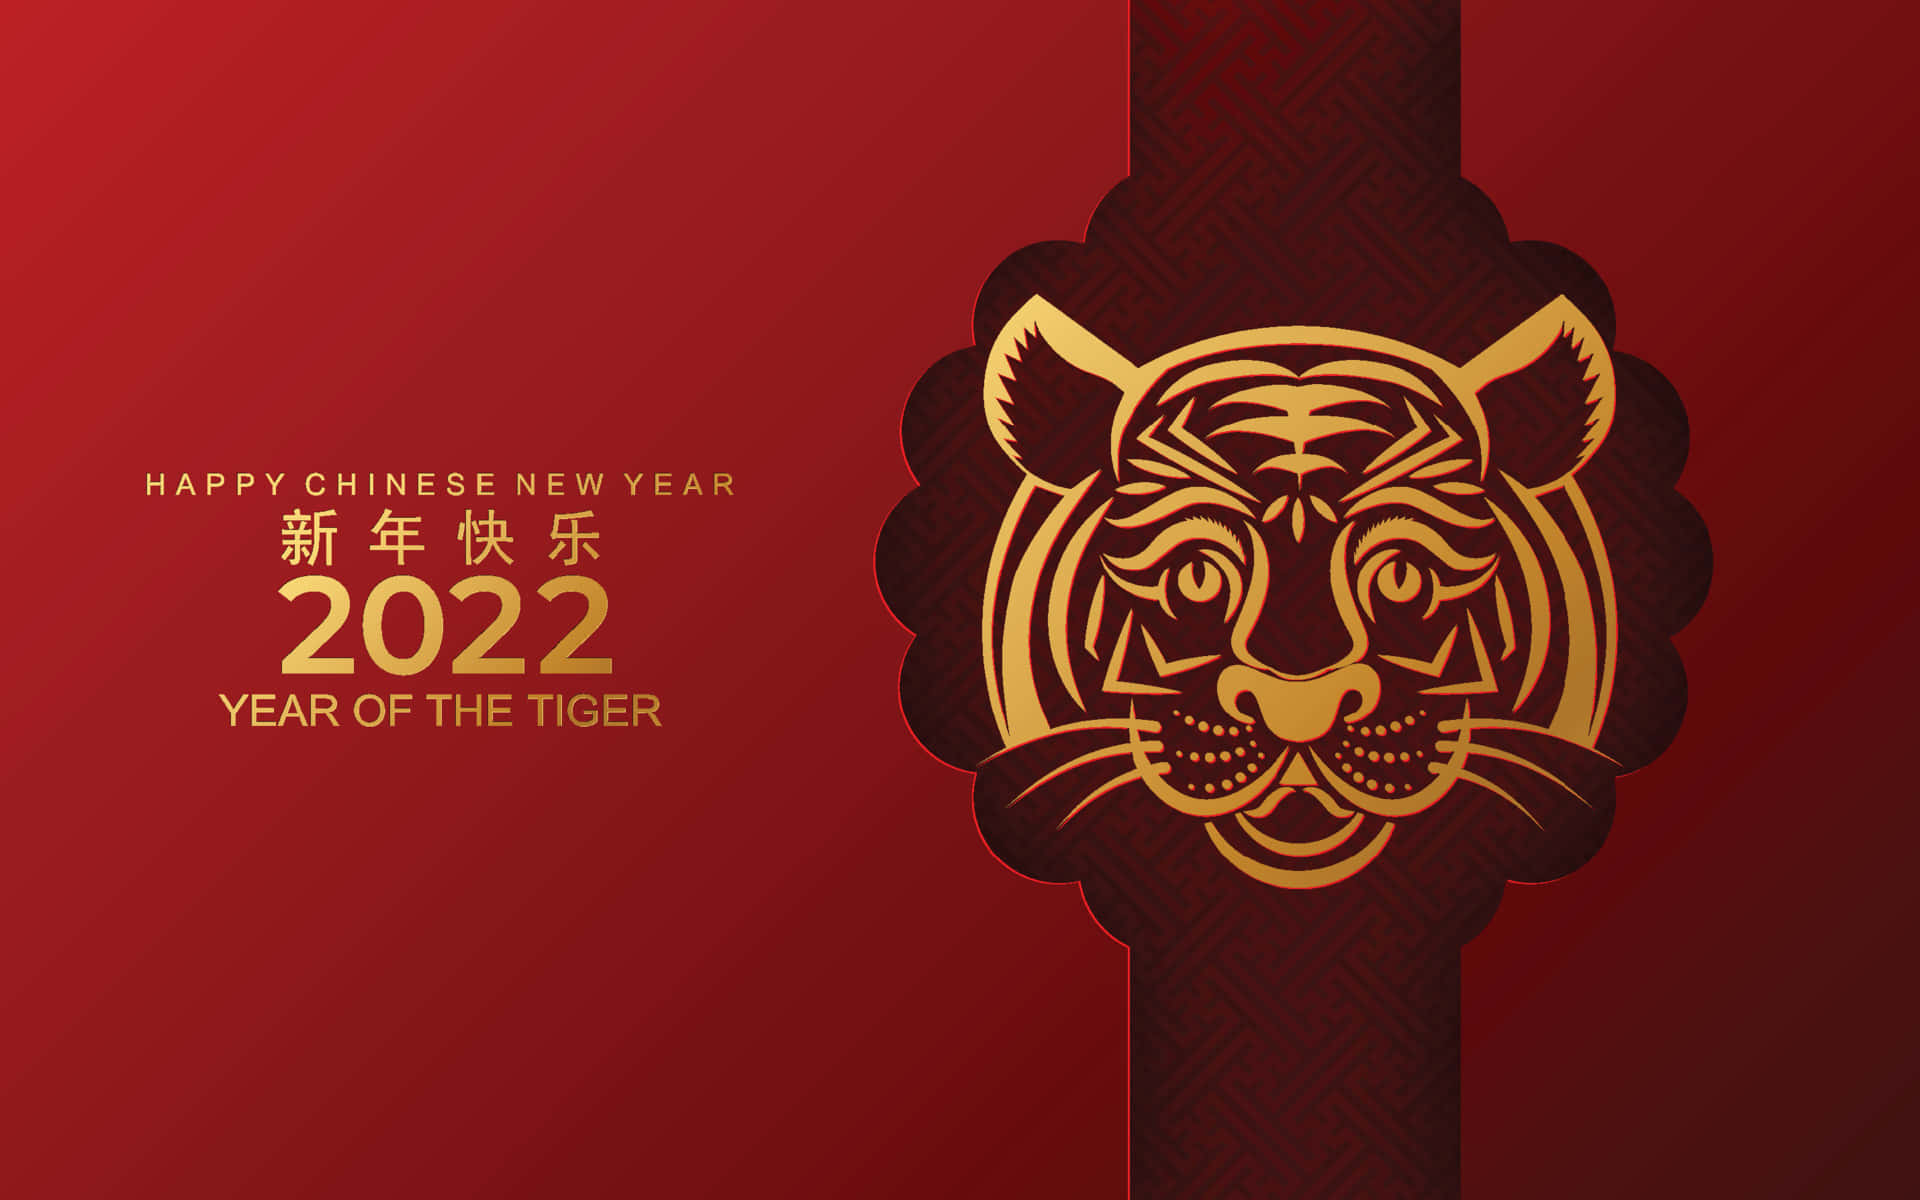 Celebrandoel Año Nuevo Chino 2022